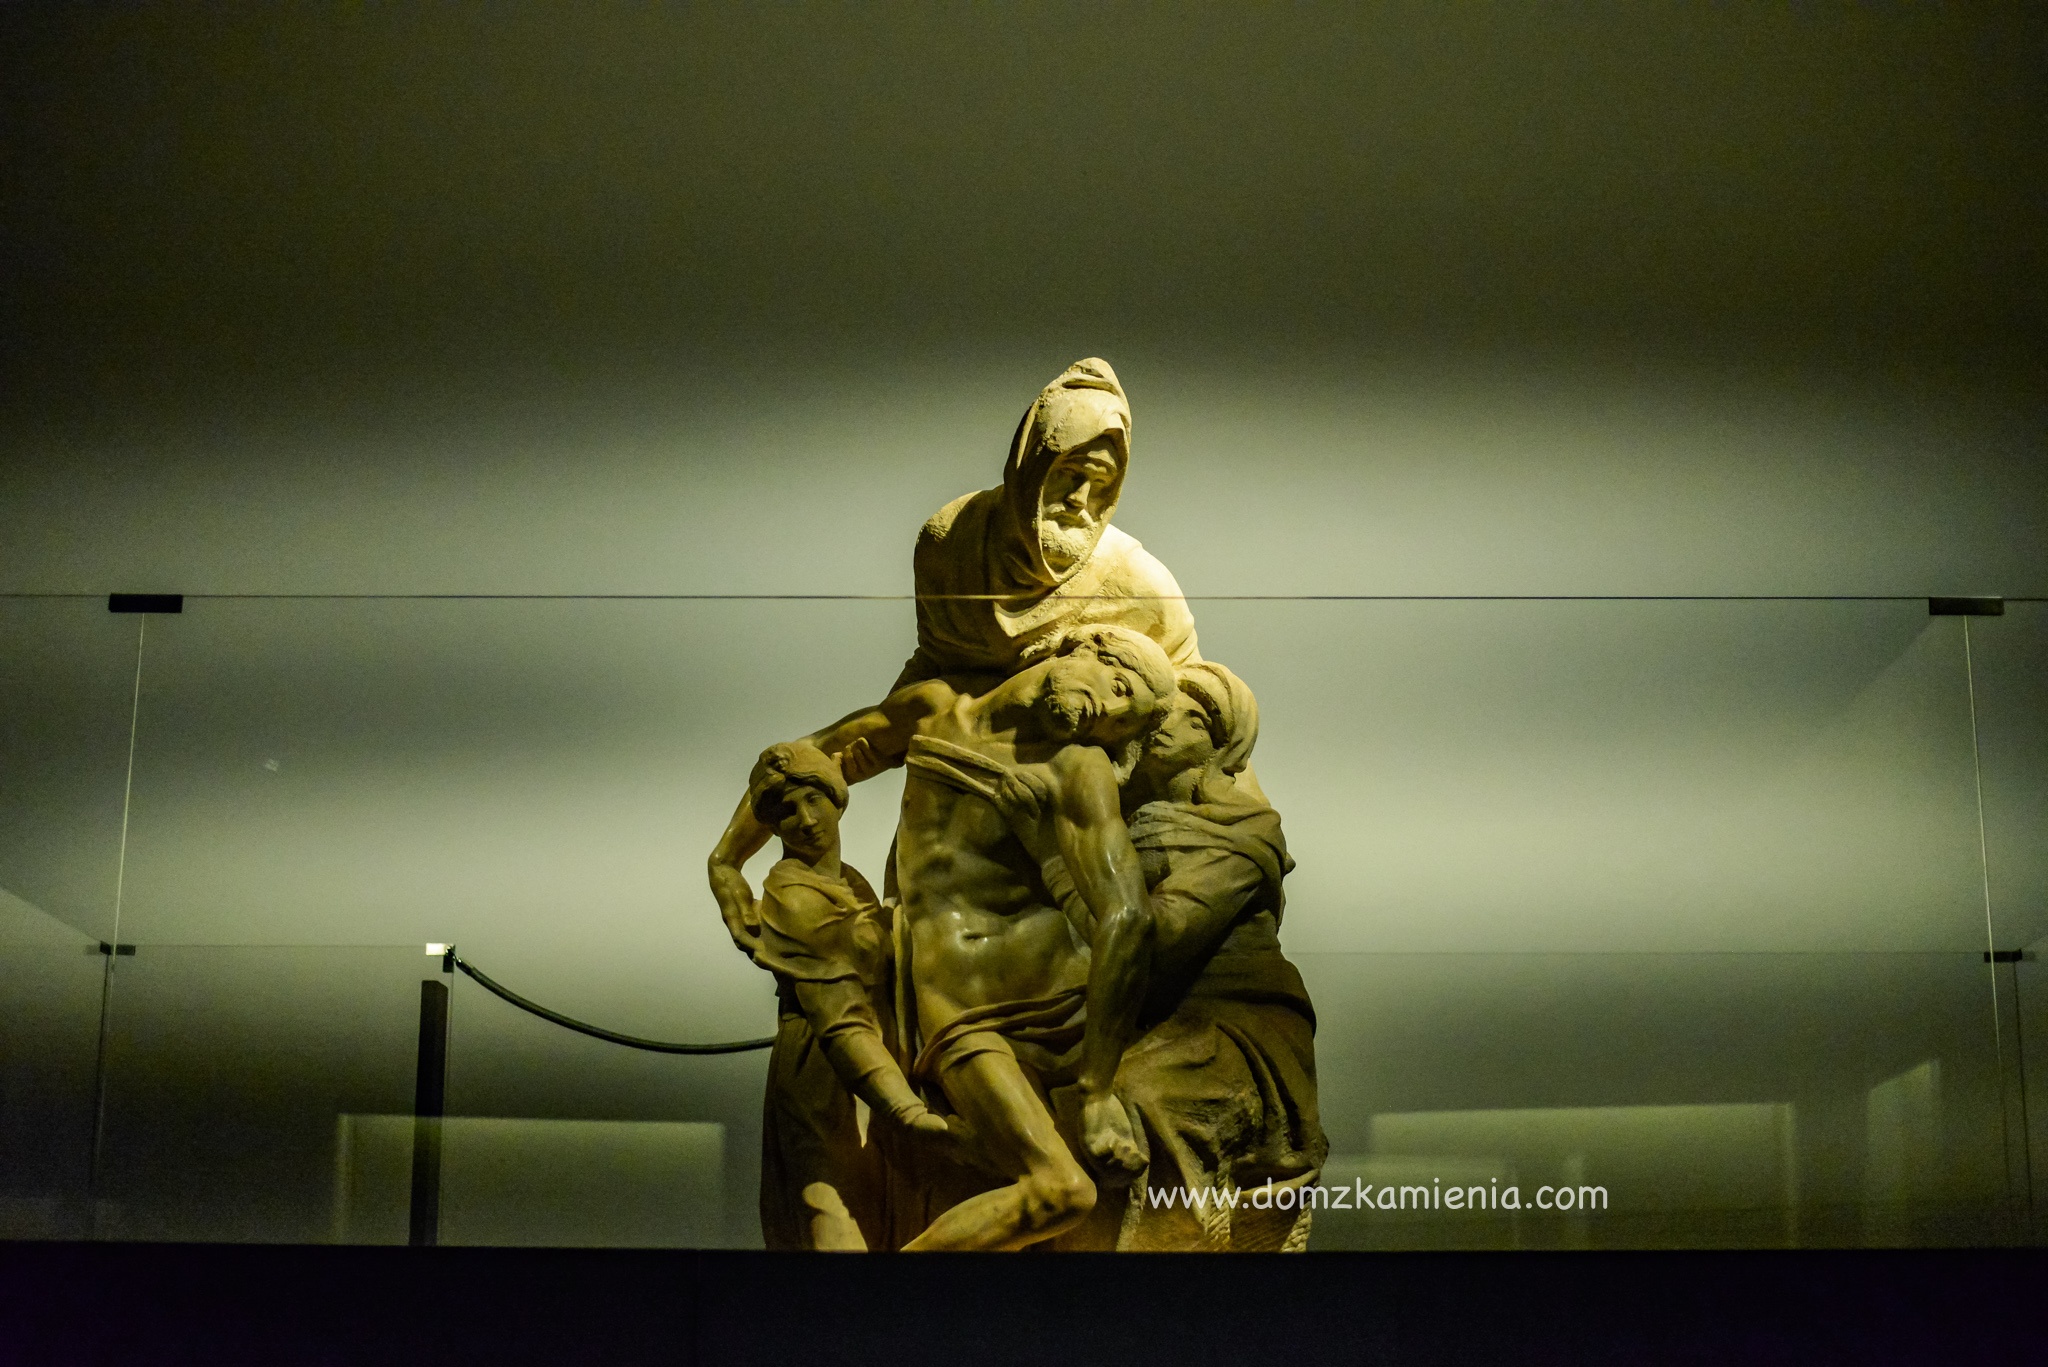 Museo dell'opera del Duomo - Sekrety Florencji, Katarzyna nowacka